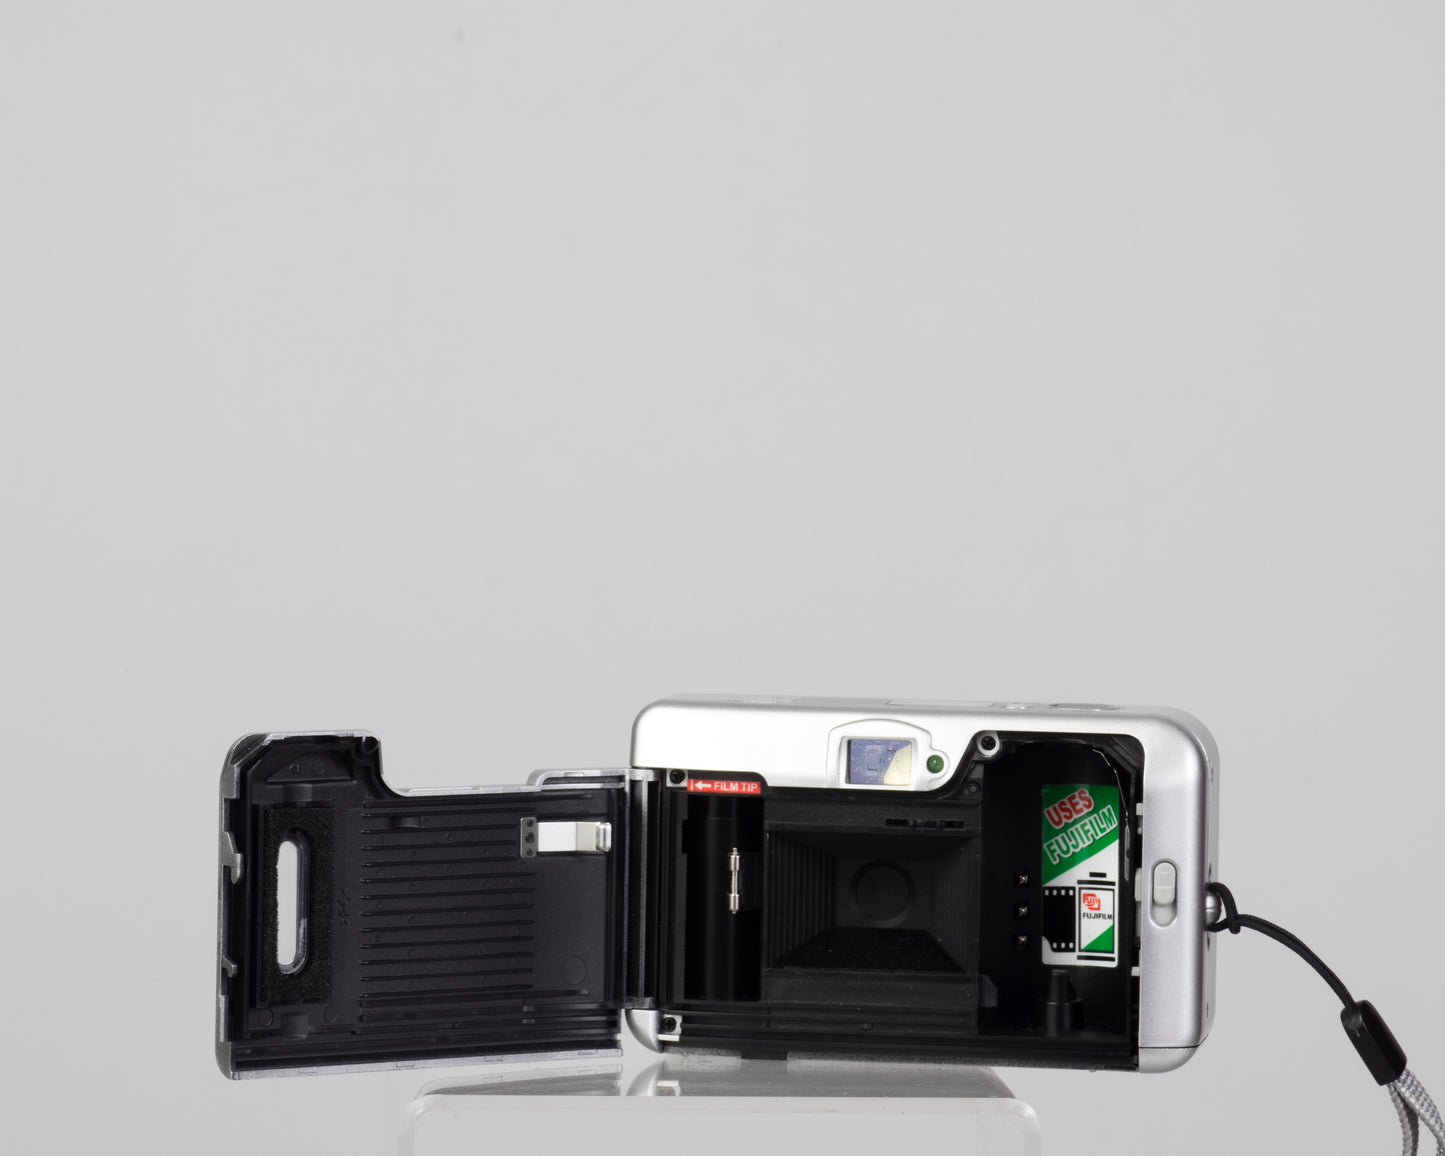 The Fujifilm Clear Shot S Autofocus ultracompact 35mm film camera